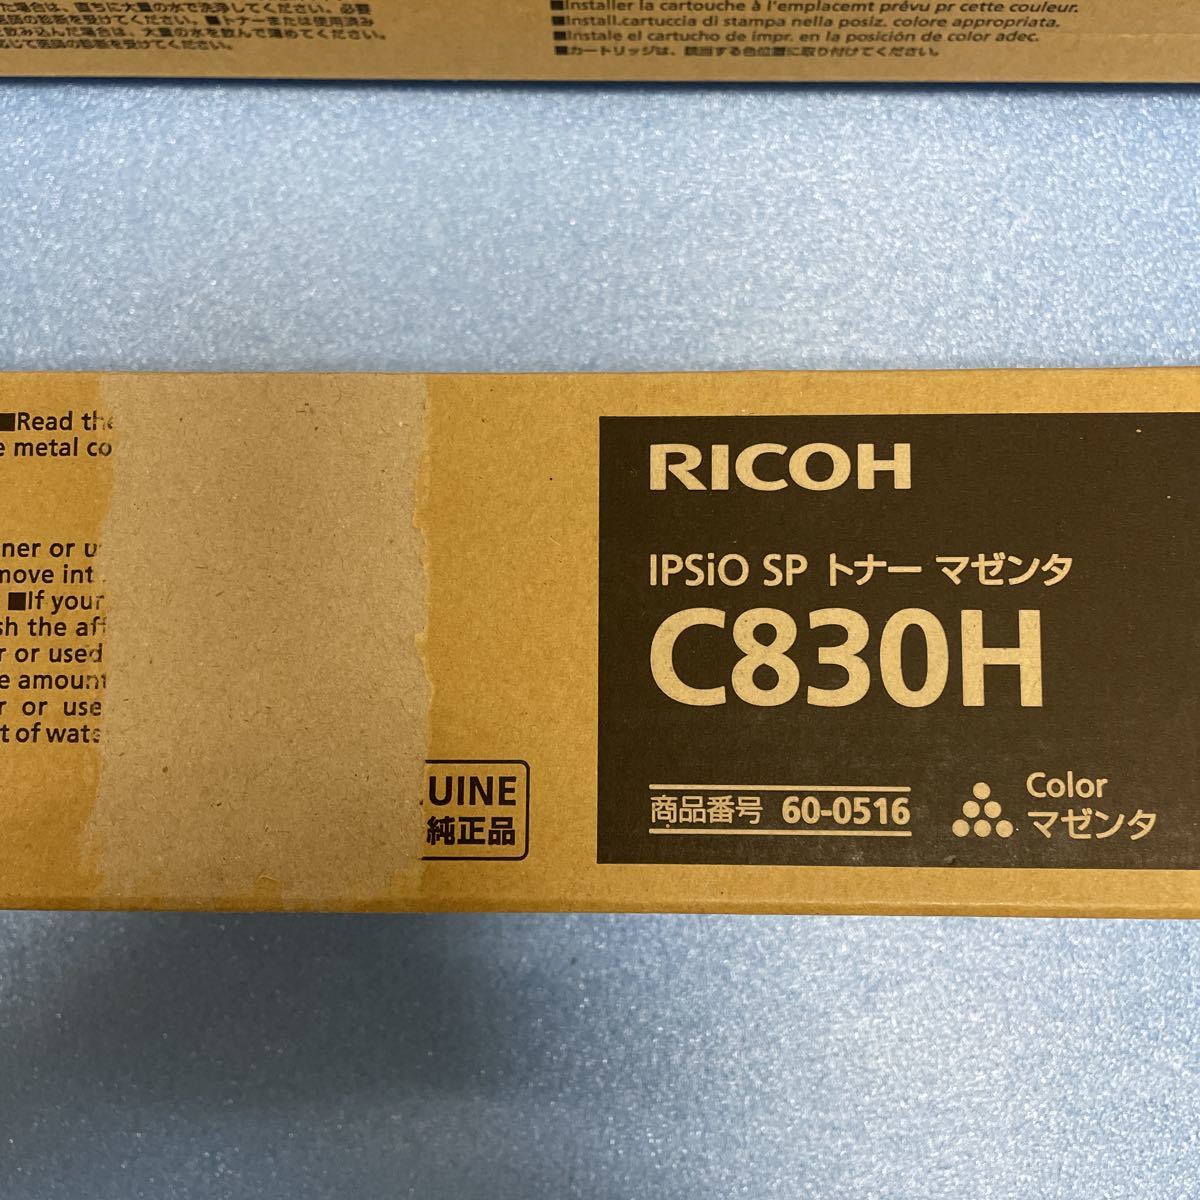 RICOH IPSiO SP トナー C830H 2本 純正品 リコー cnema.fr